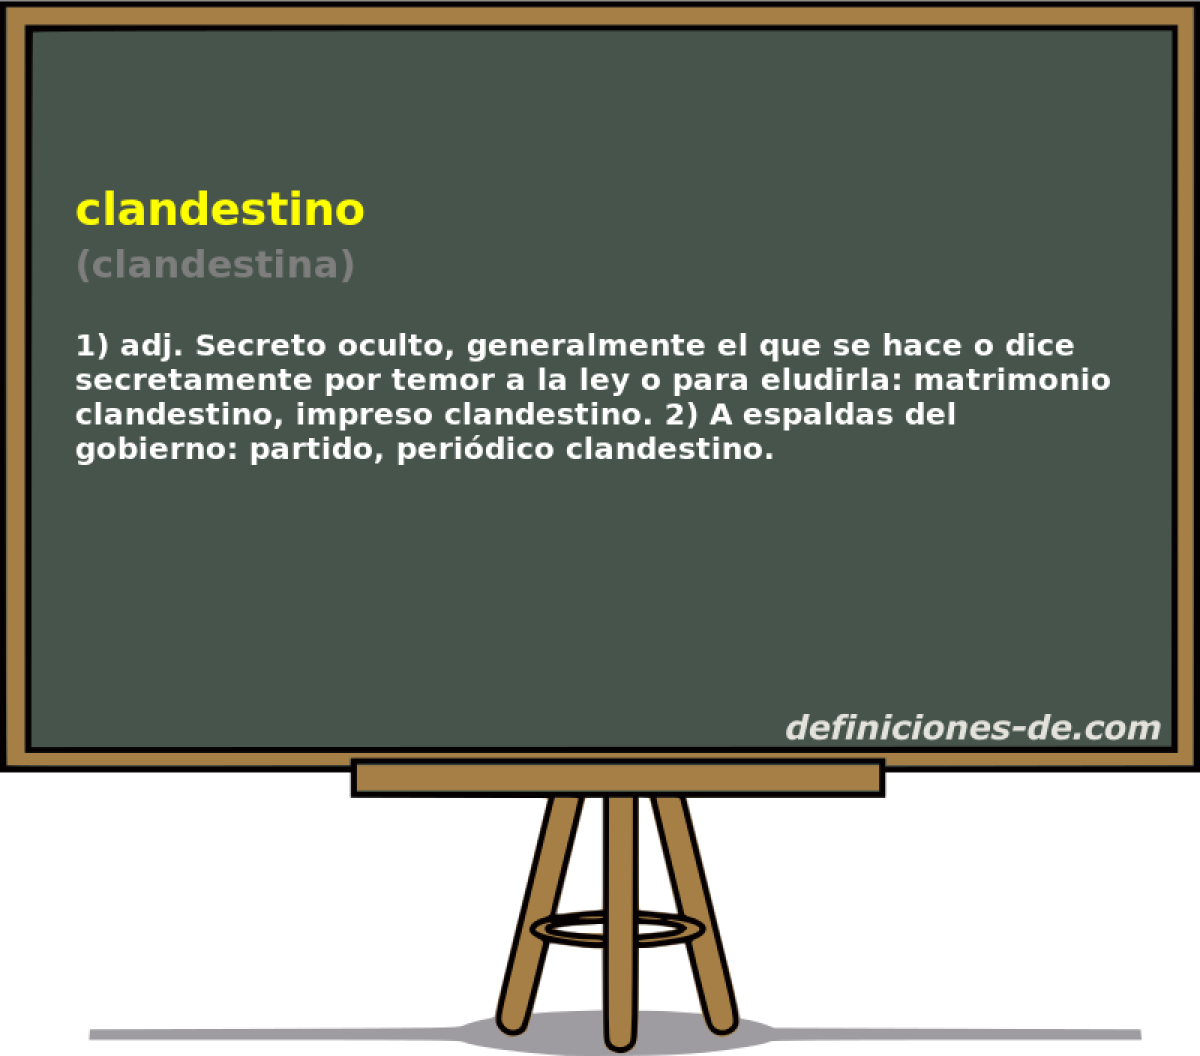 clandestino (clandestina)